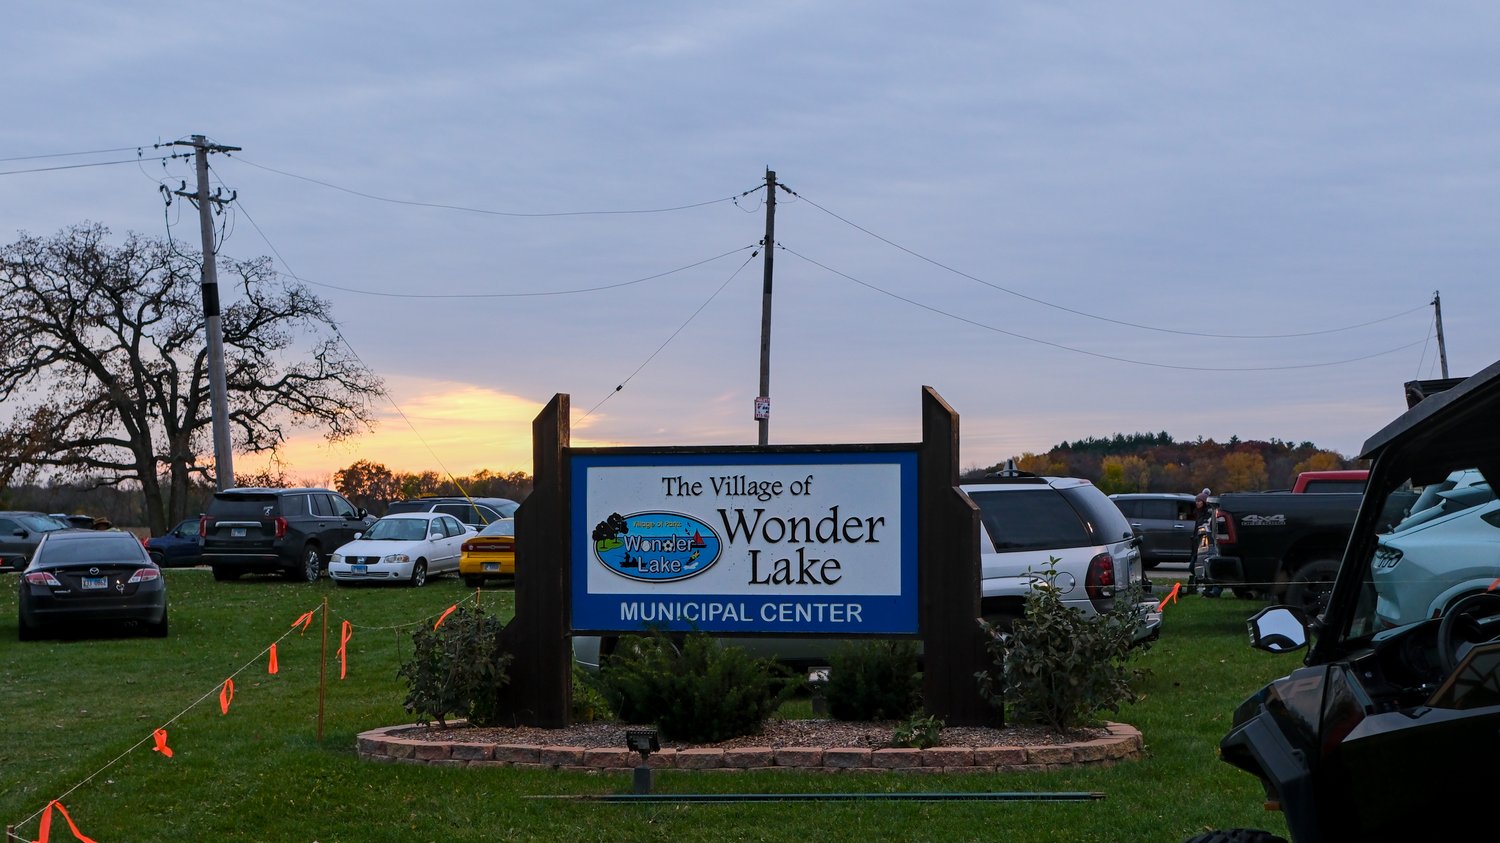 The Village of Wonder Lake sign at the Municipal Center.